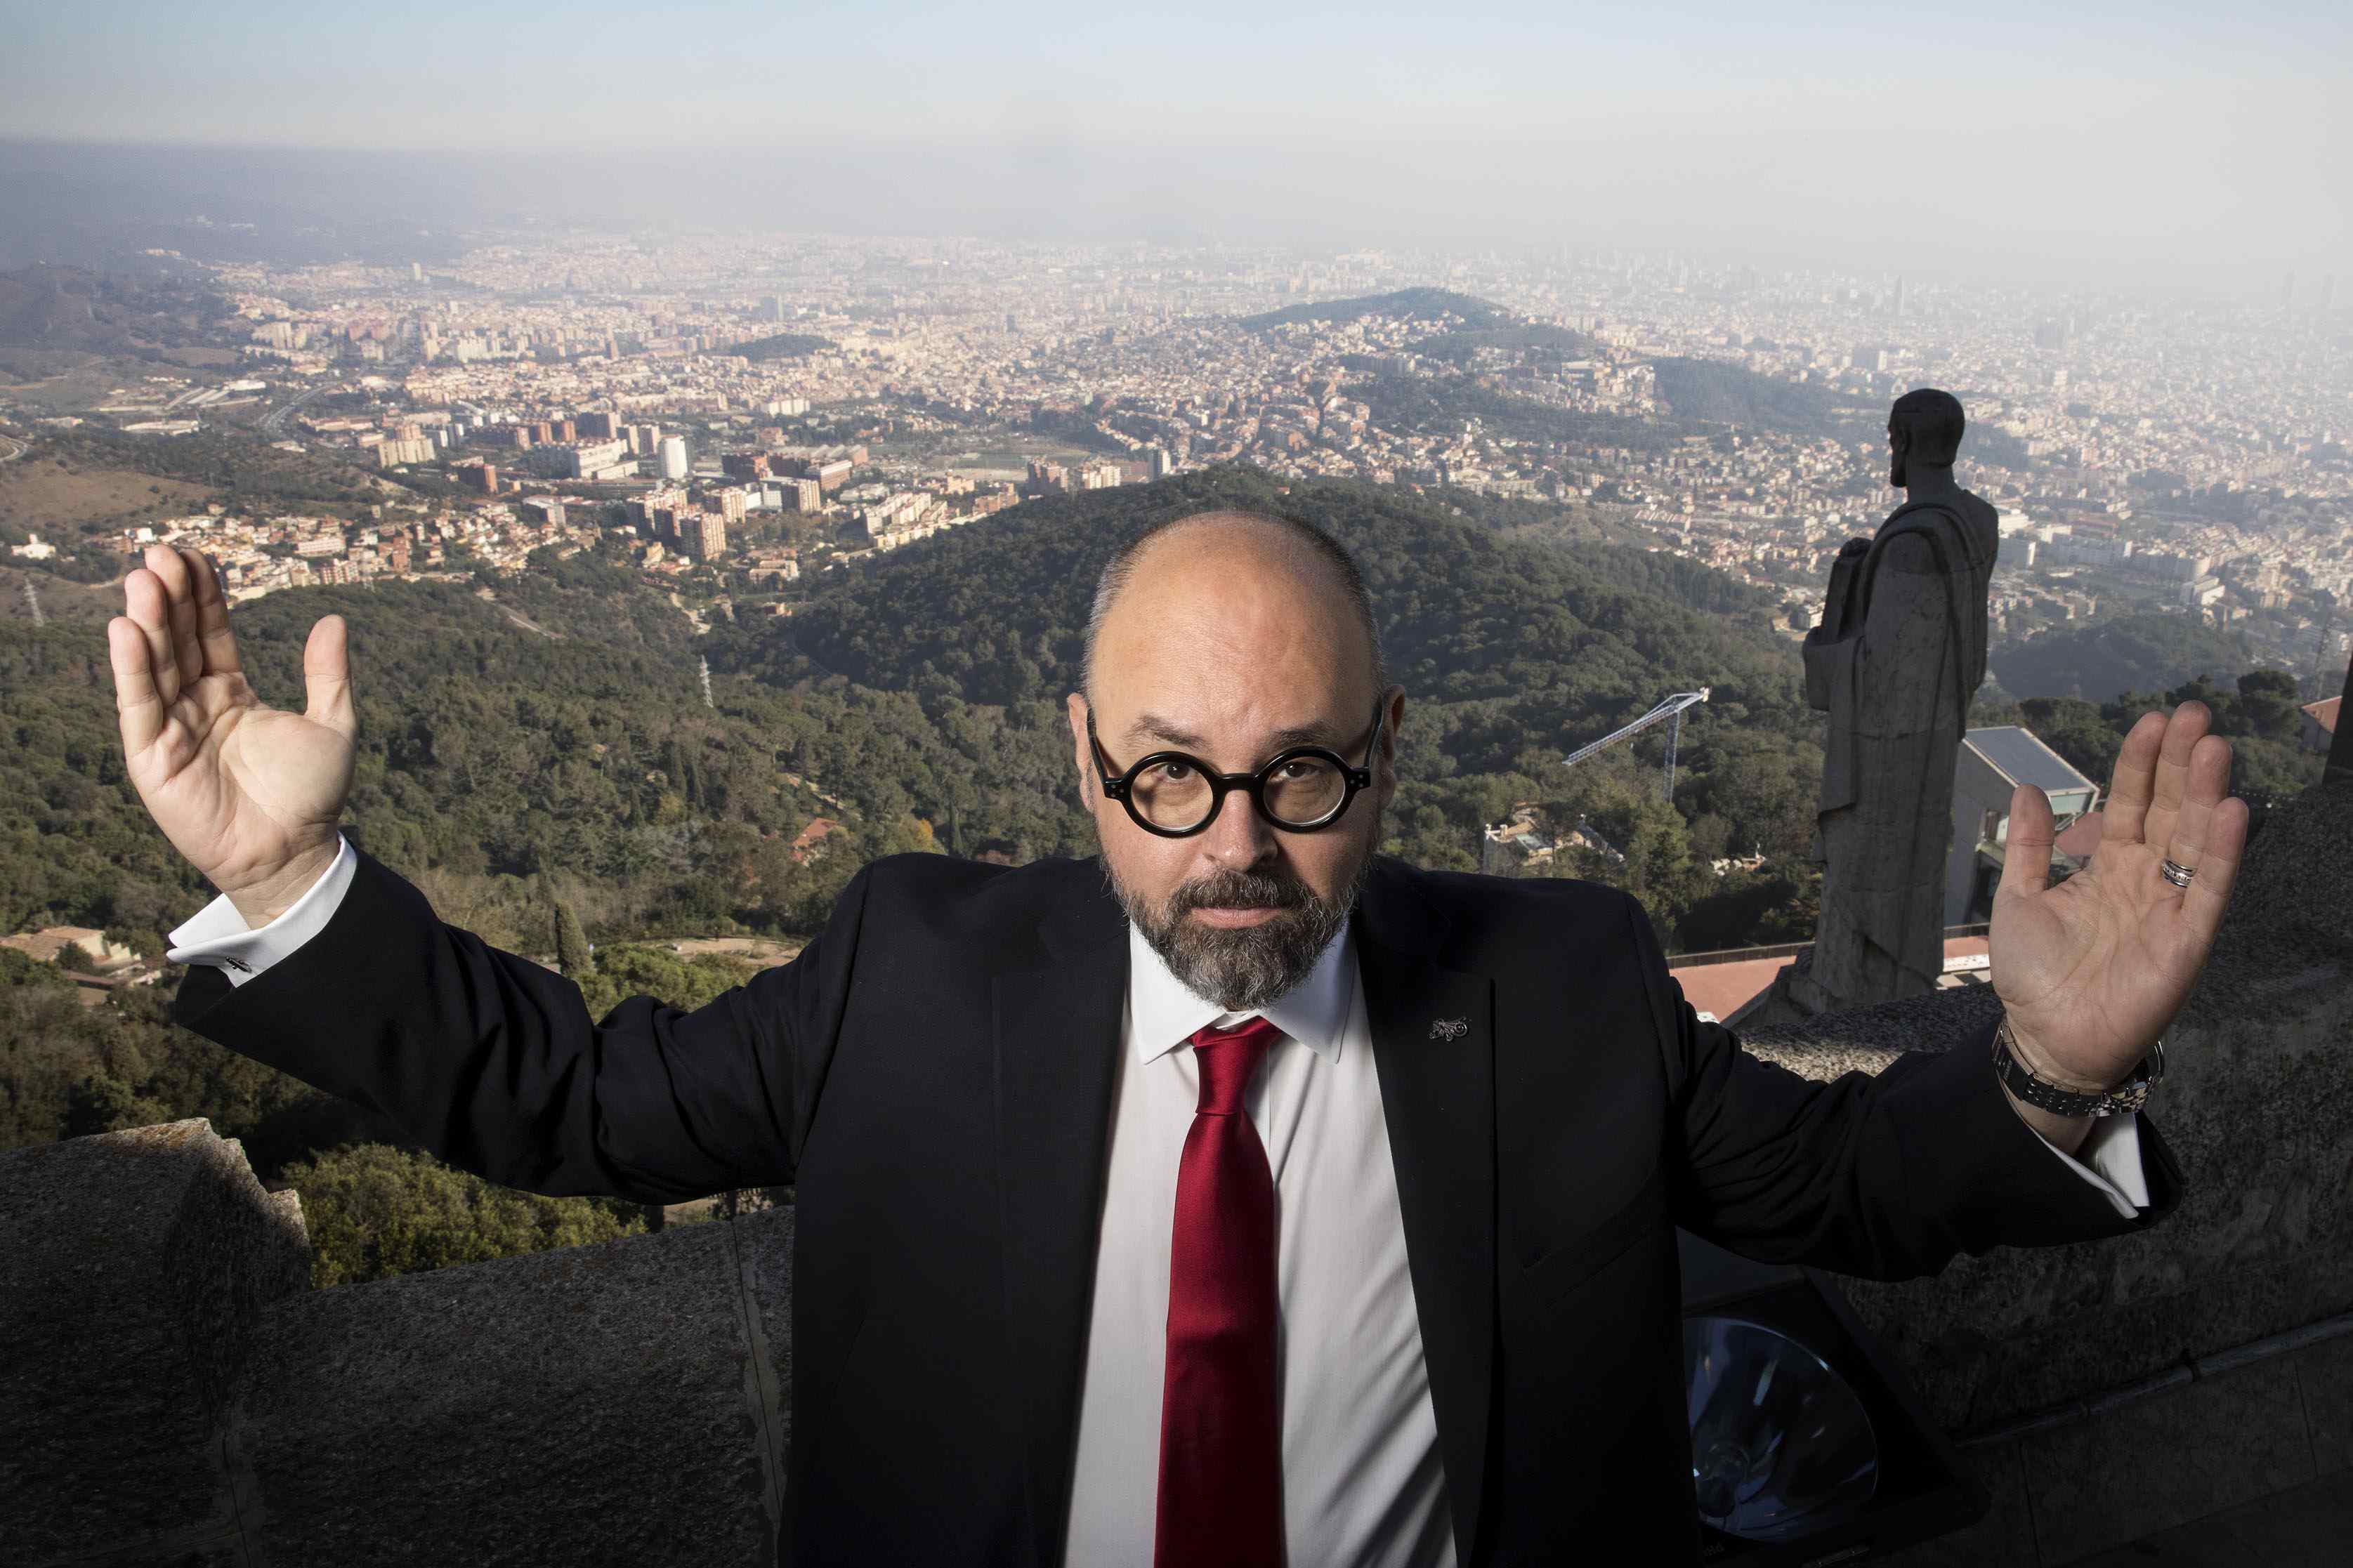 Reconeixement transversal a Zafón: "Ha fet créixer el mapa literari barceloní"